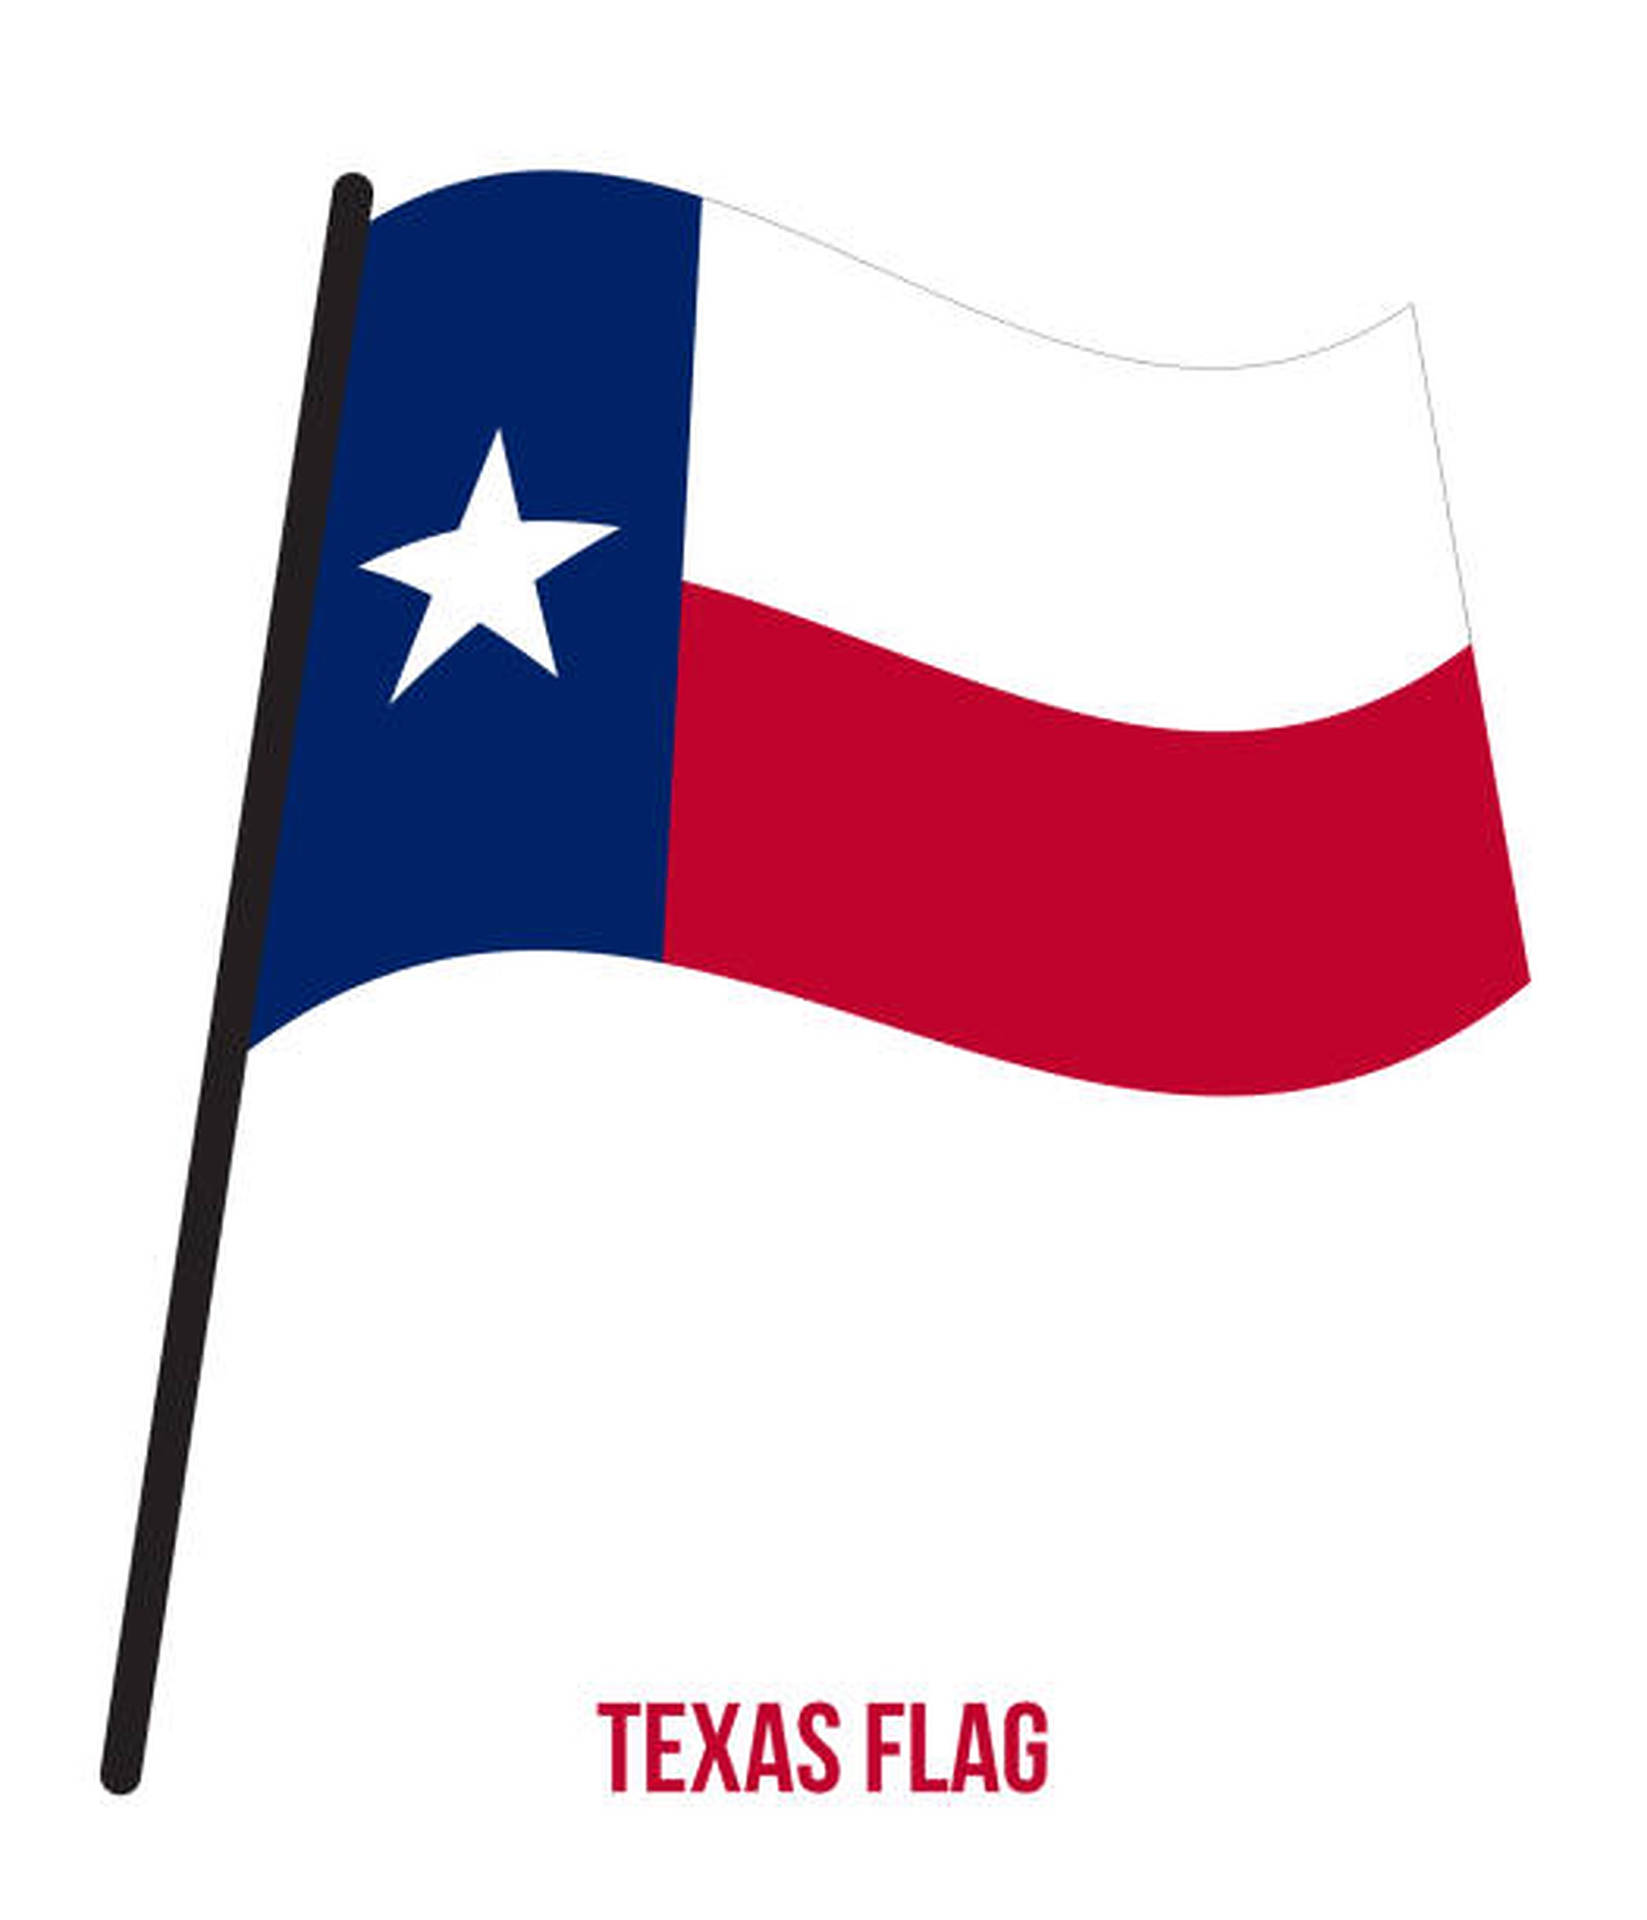 Texas Flag Illustration Background